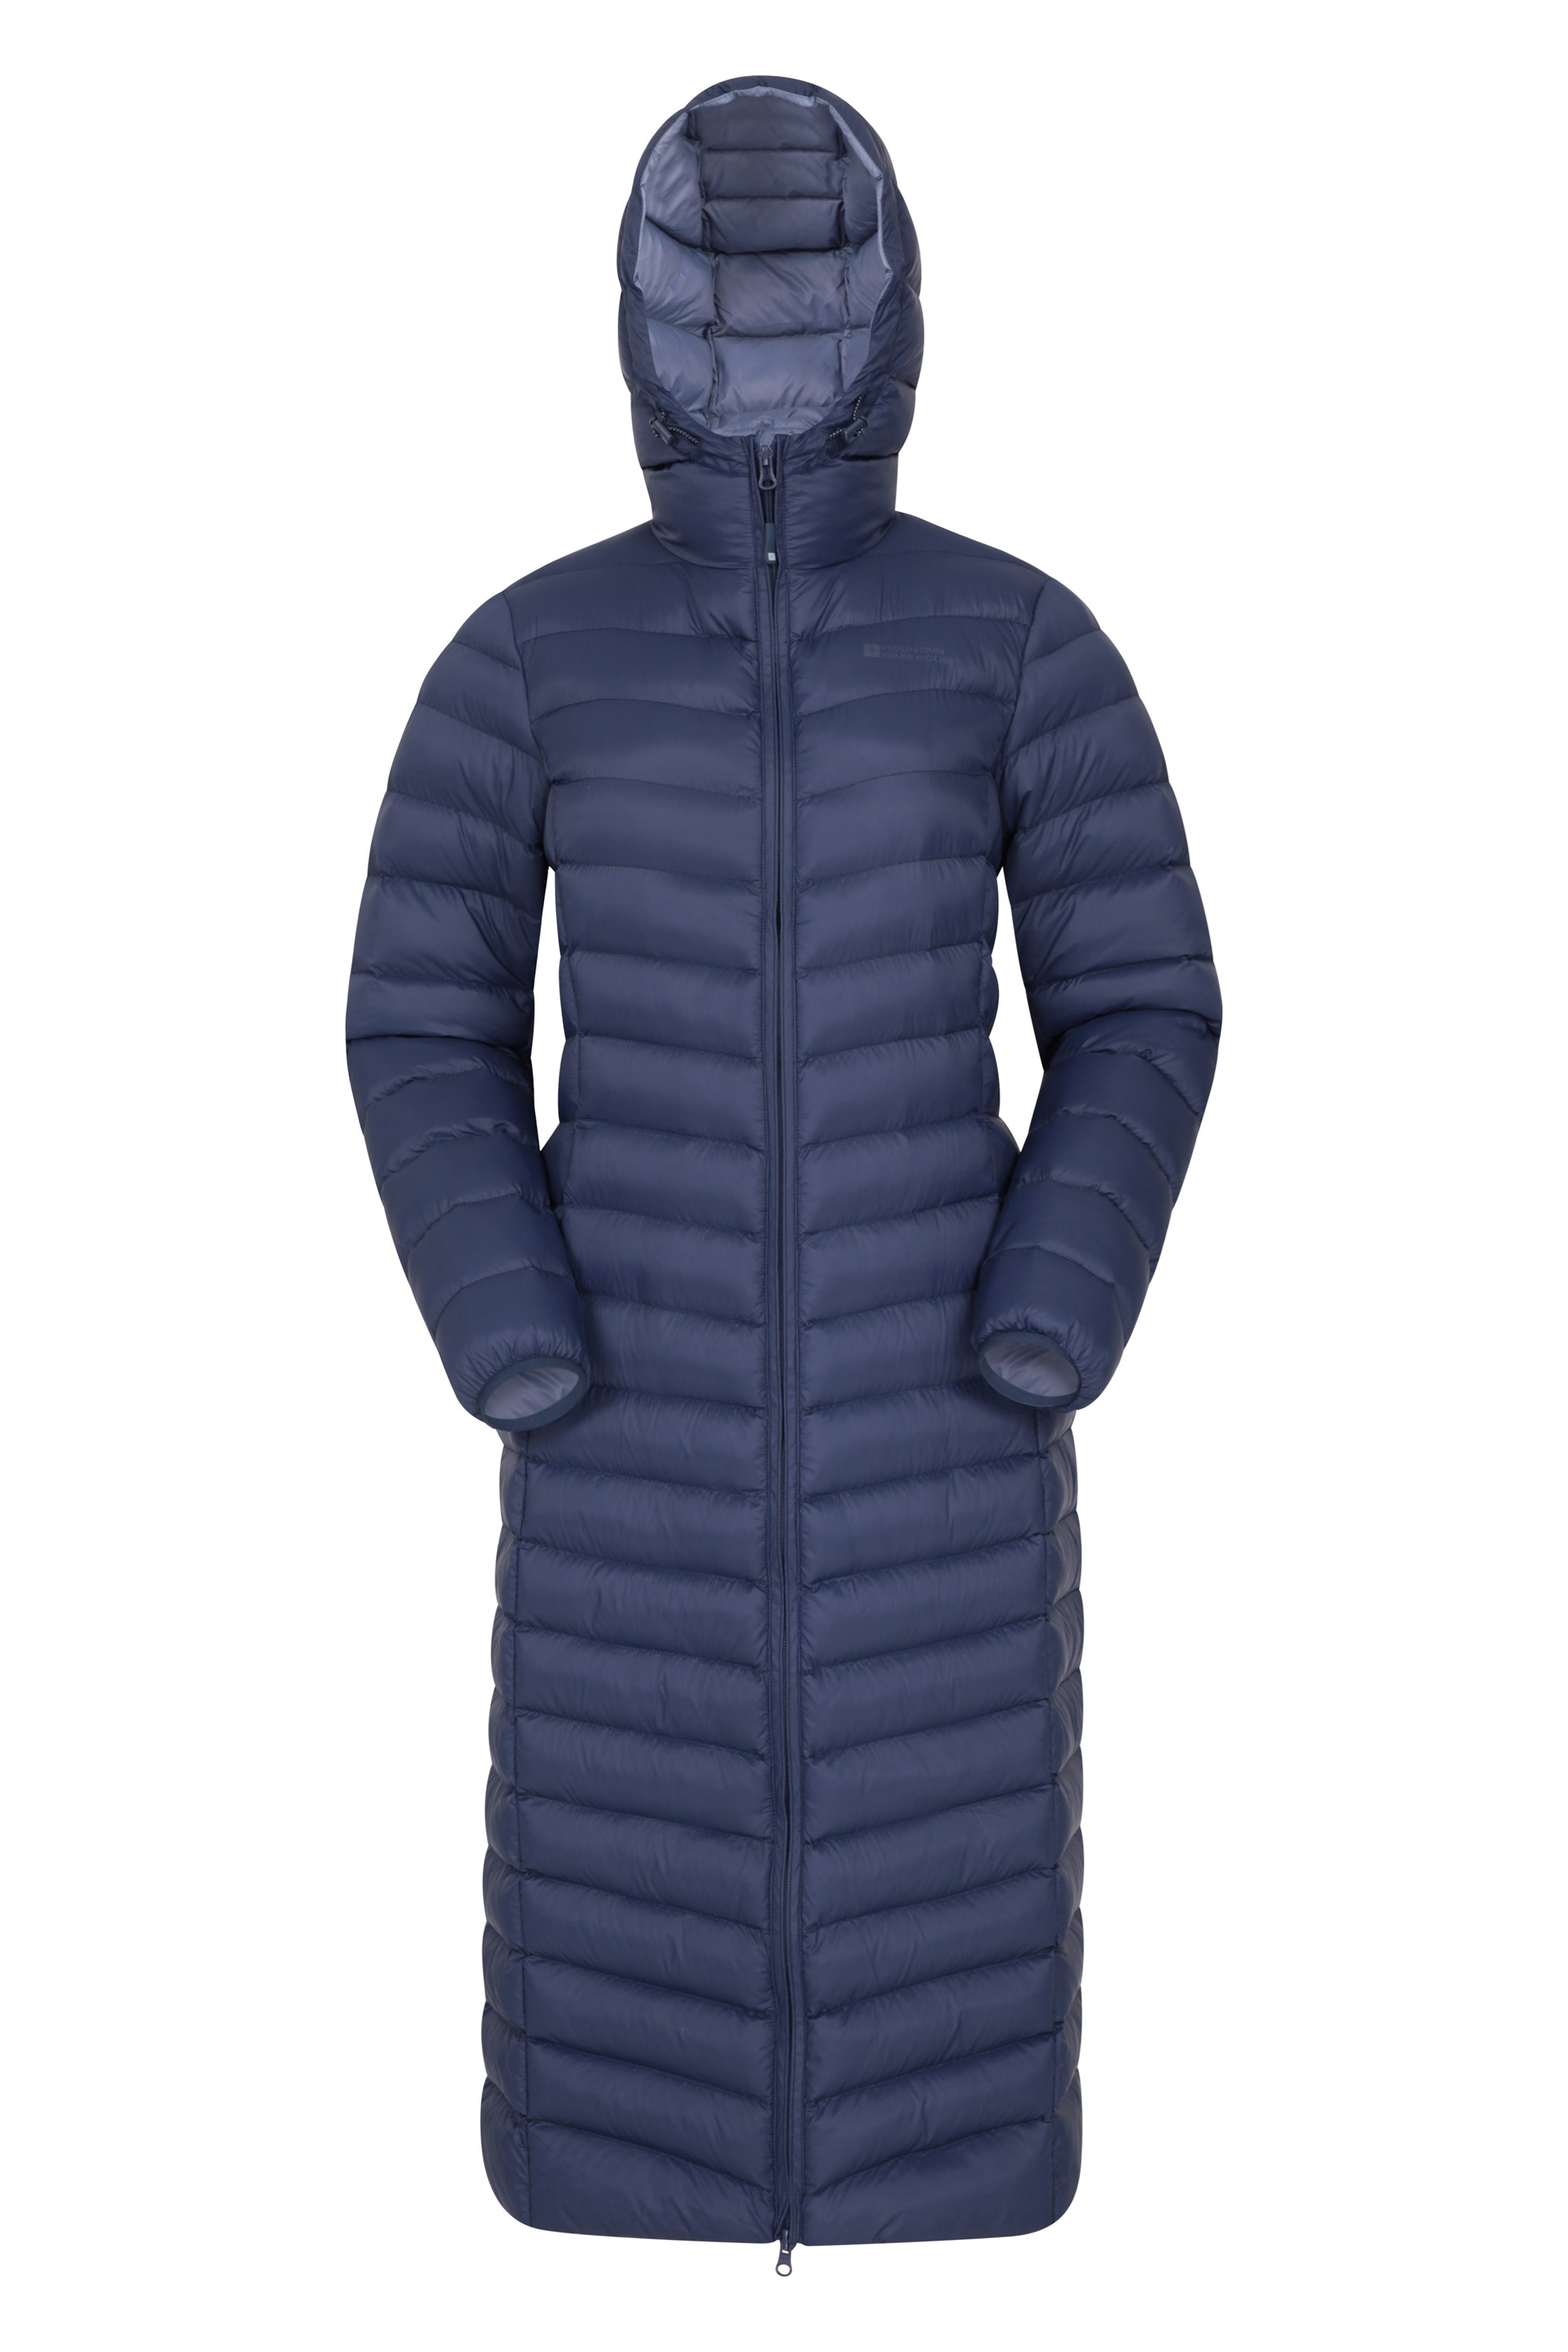 Mountain Warehouse Womens Long Padded Jacket Water Resistant Winter Ladies Coat 